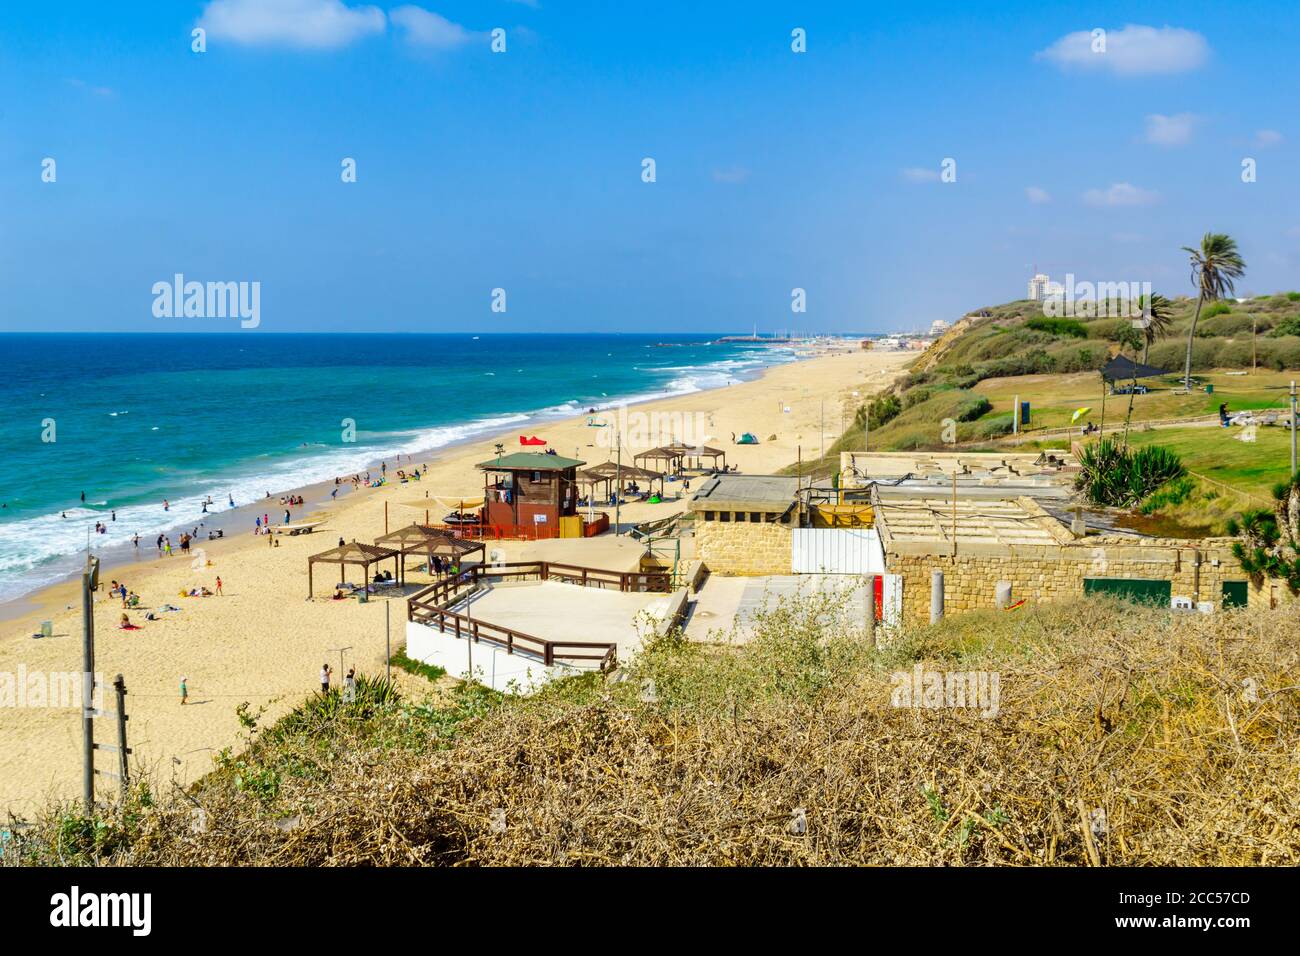 ASHKELON, ISRAEL - SEPTEMBER 10, 2017: View on Public Beach on